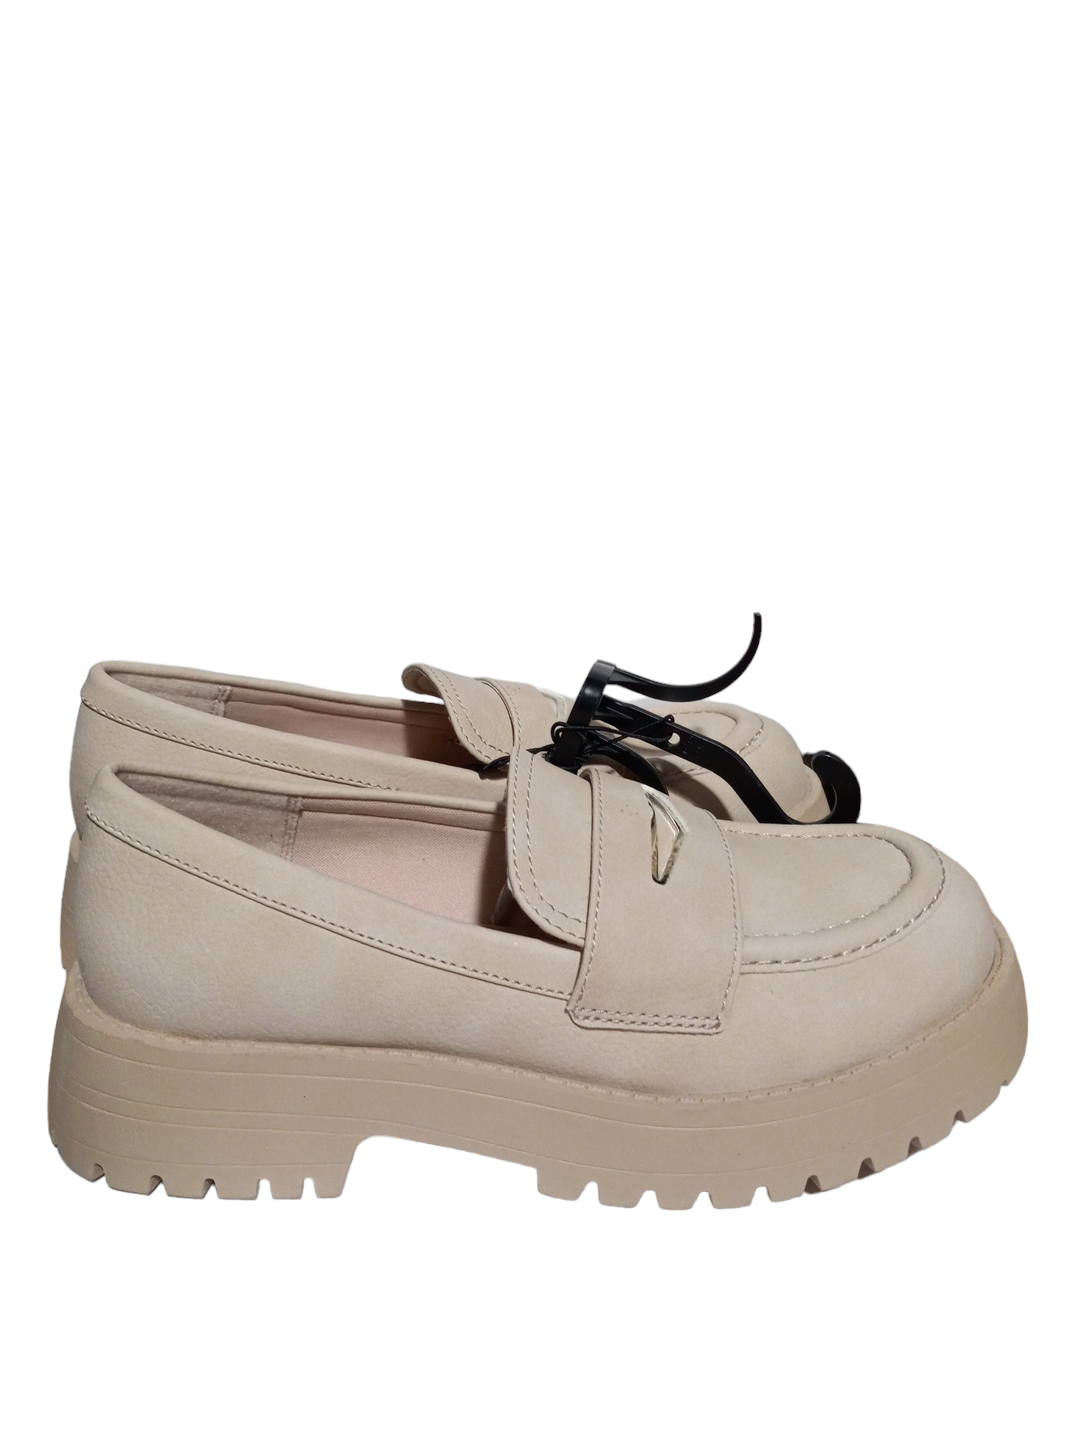 Cream Shoes Flats No Boundaries, Size 7